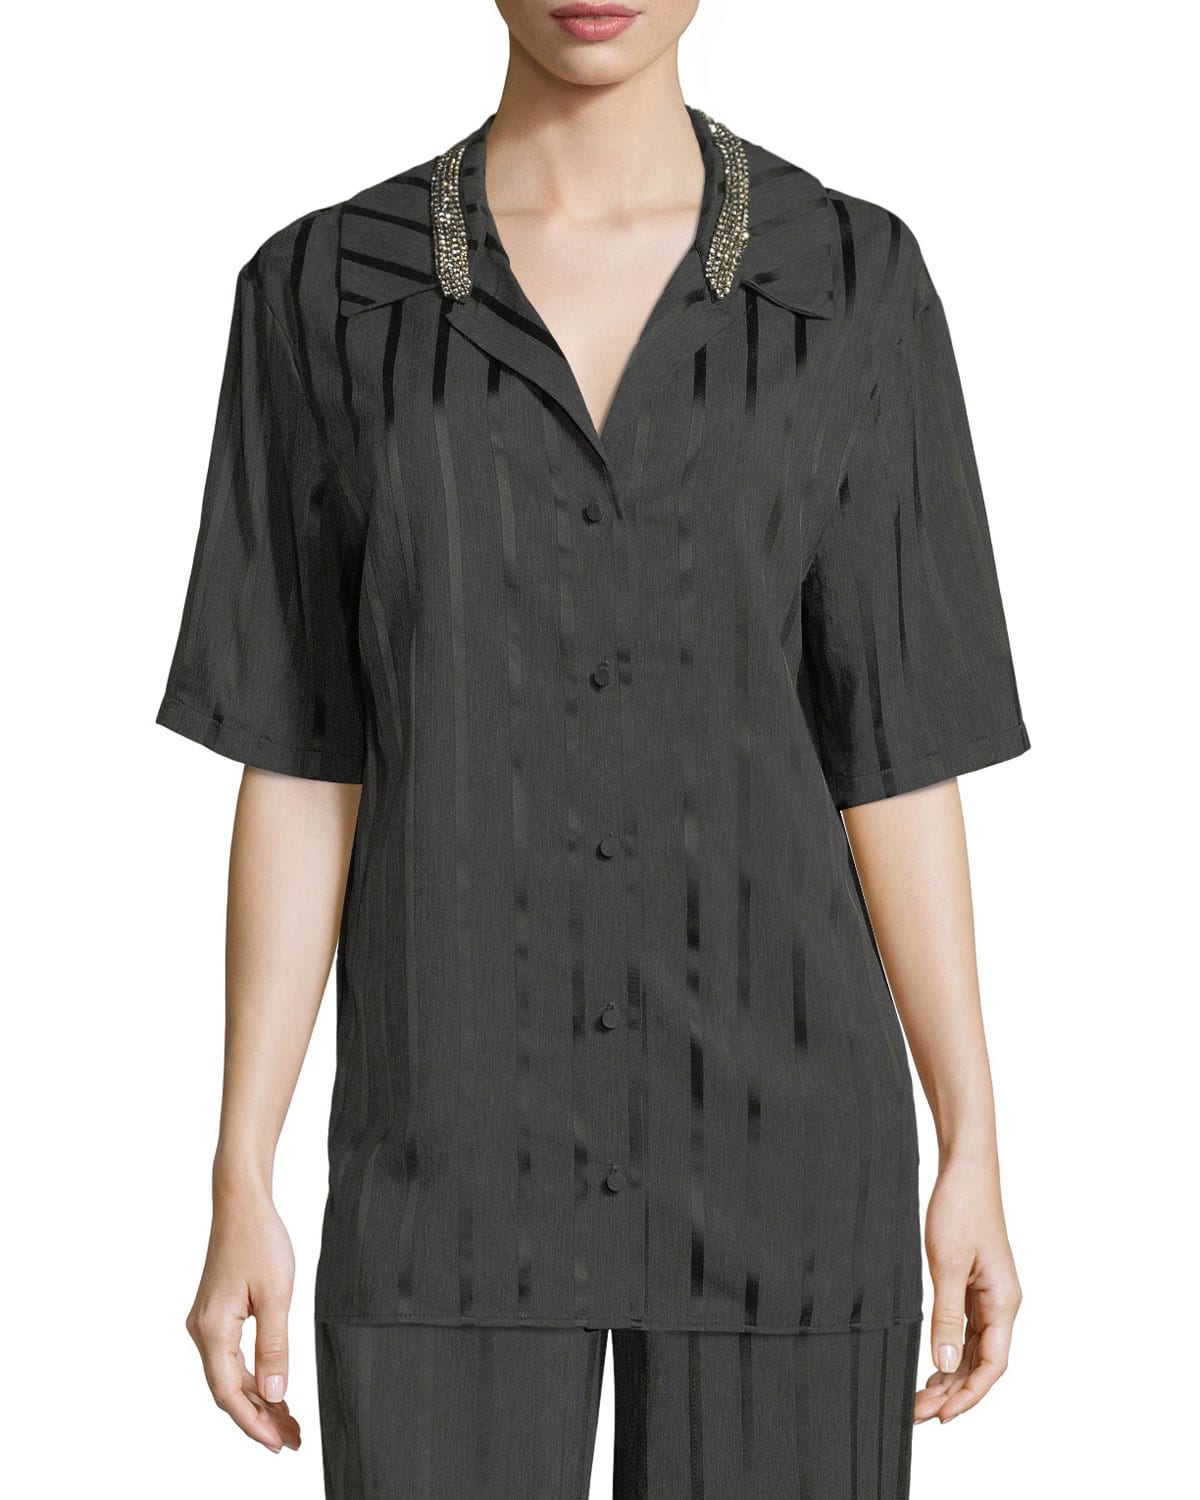 Alexander Wang Short-Sleeve Pajama Top w/ Crystal Neckline